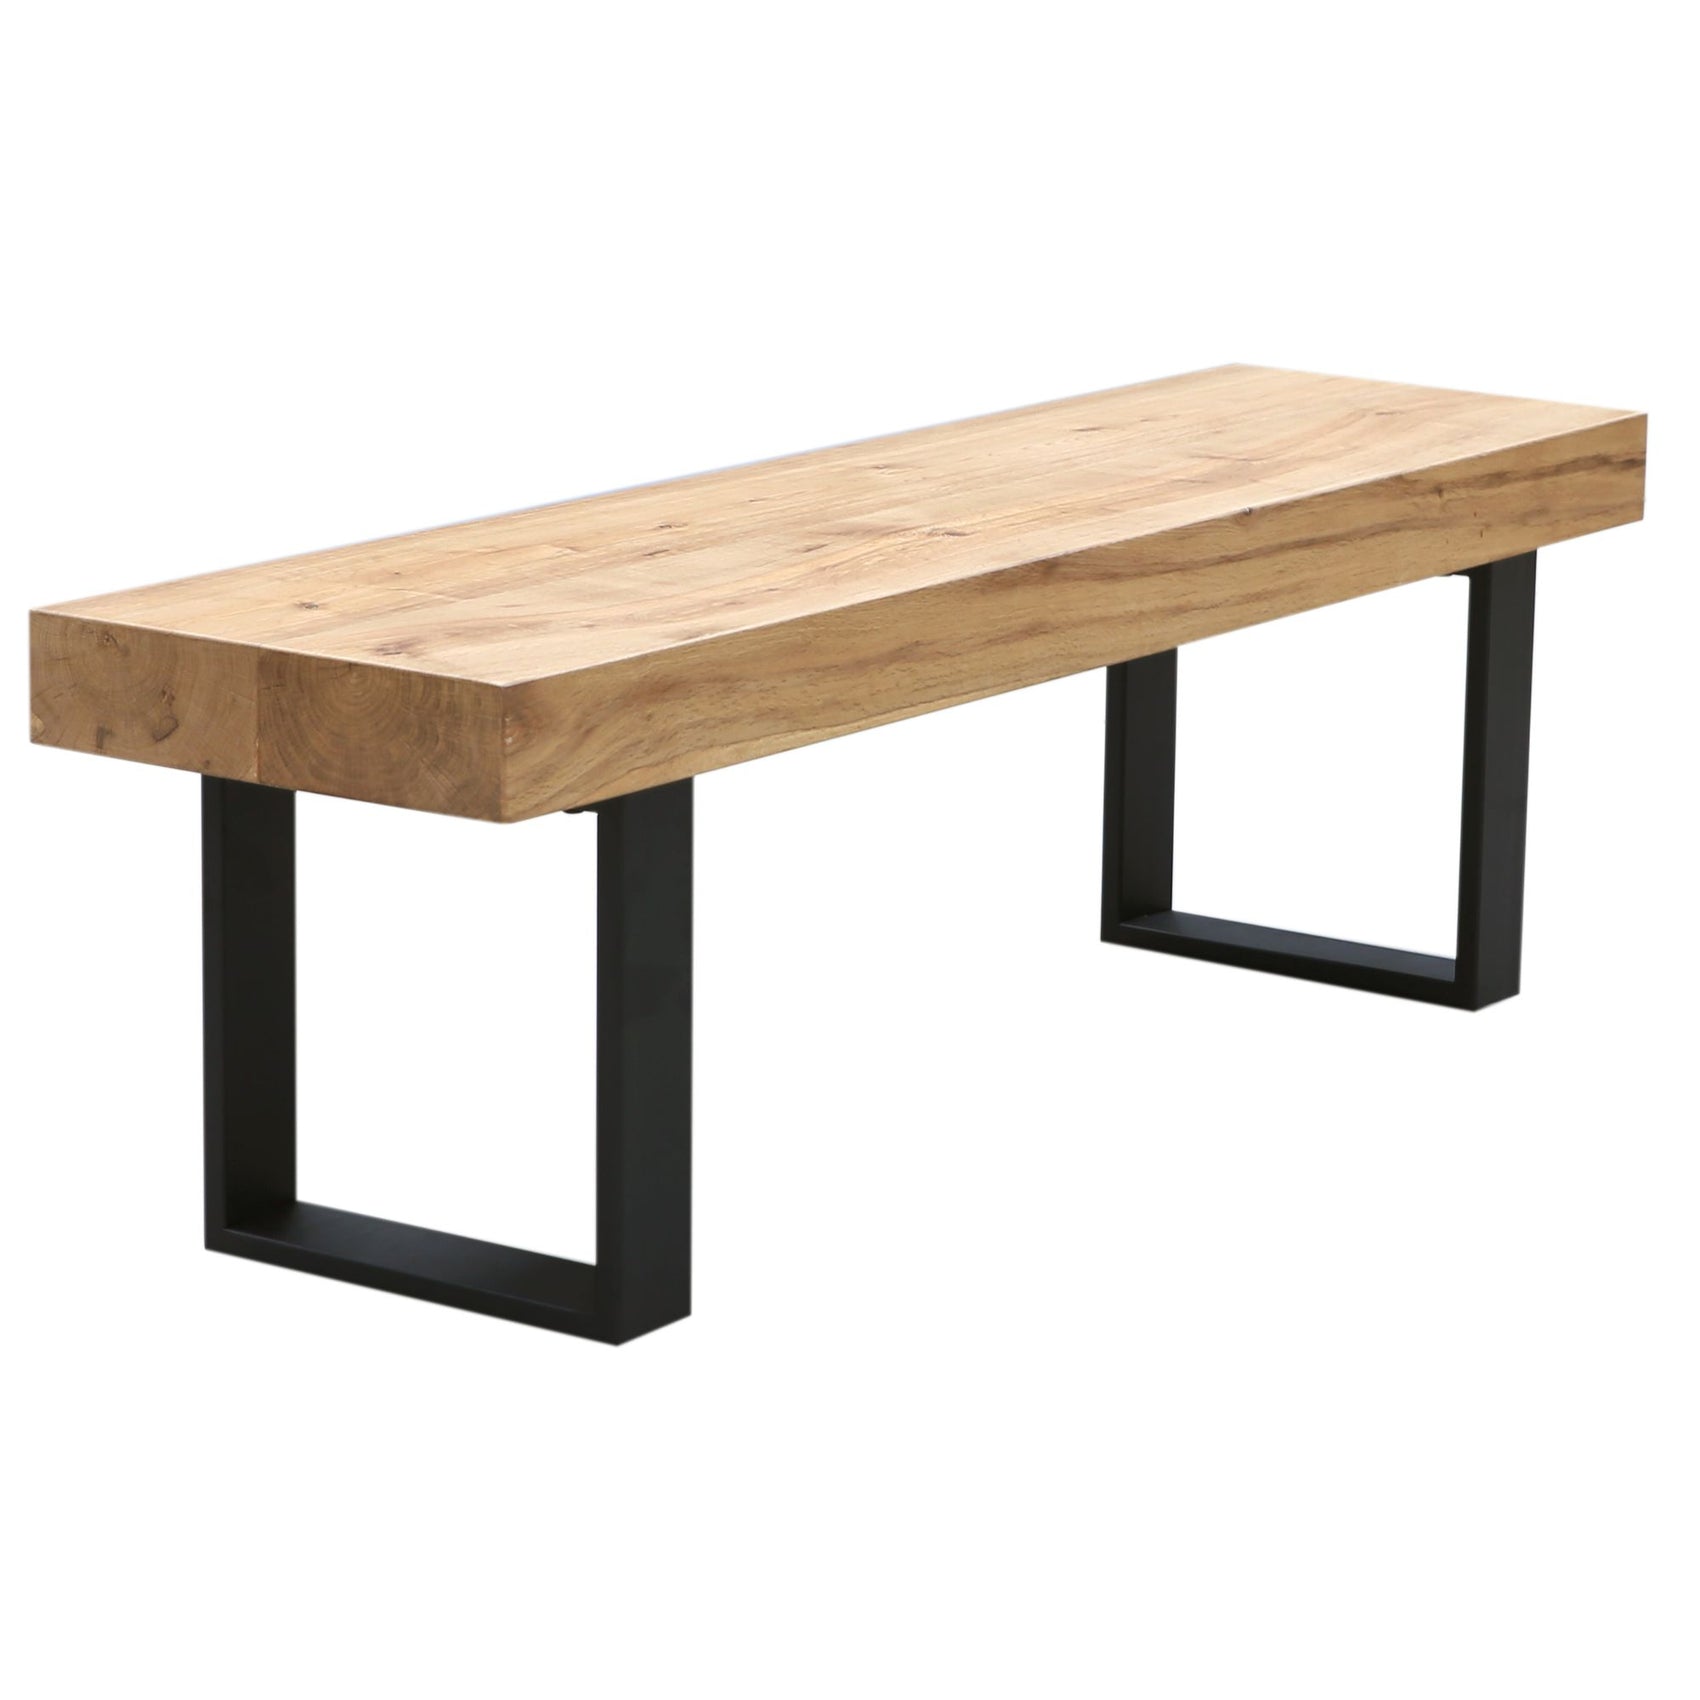 Ethan 150cm Dining Table Bench Seat Veneer Solid Oak Top Metal Leg - Natural